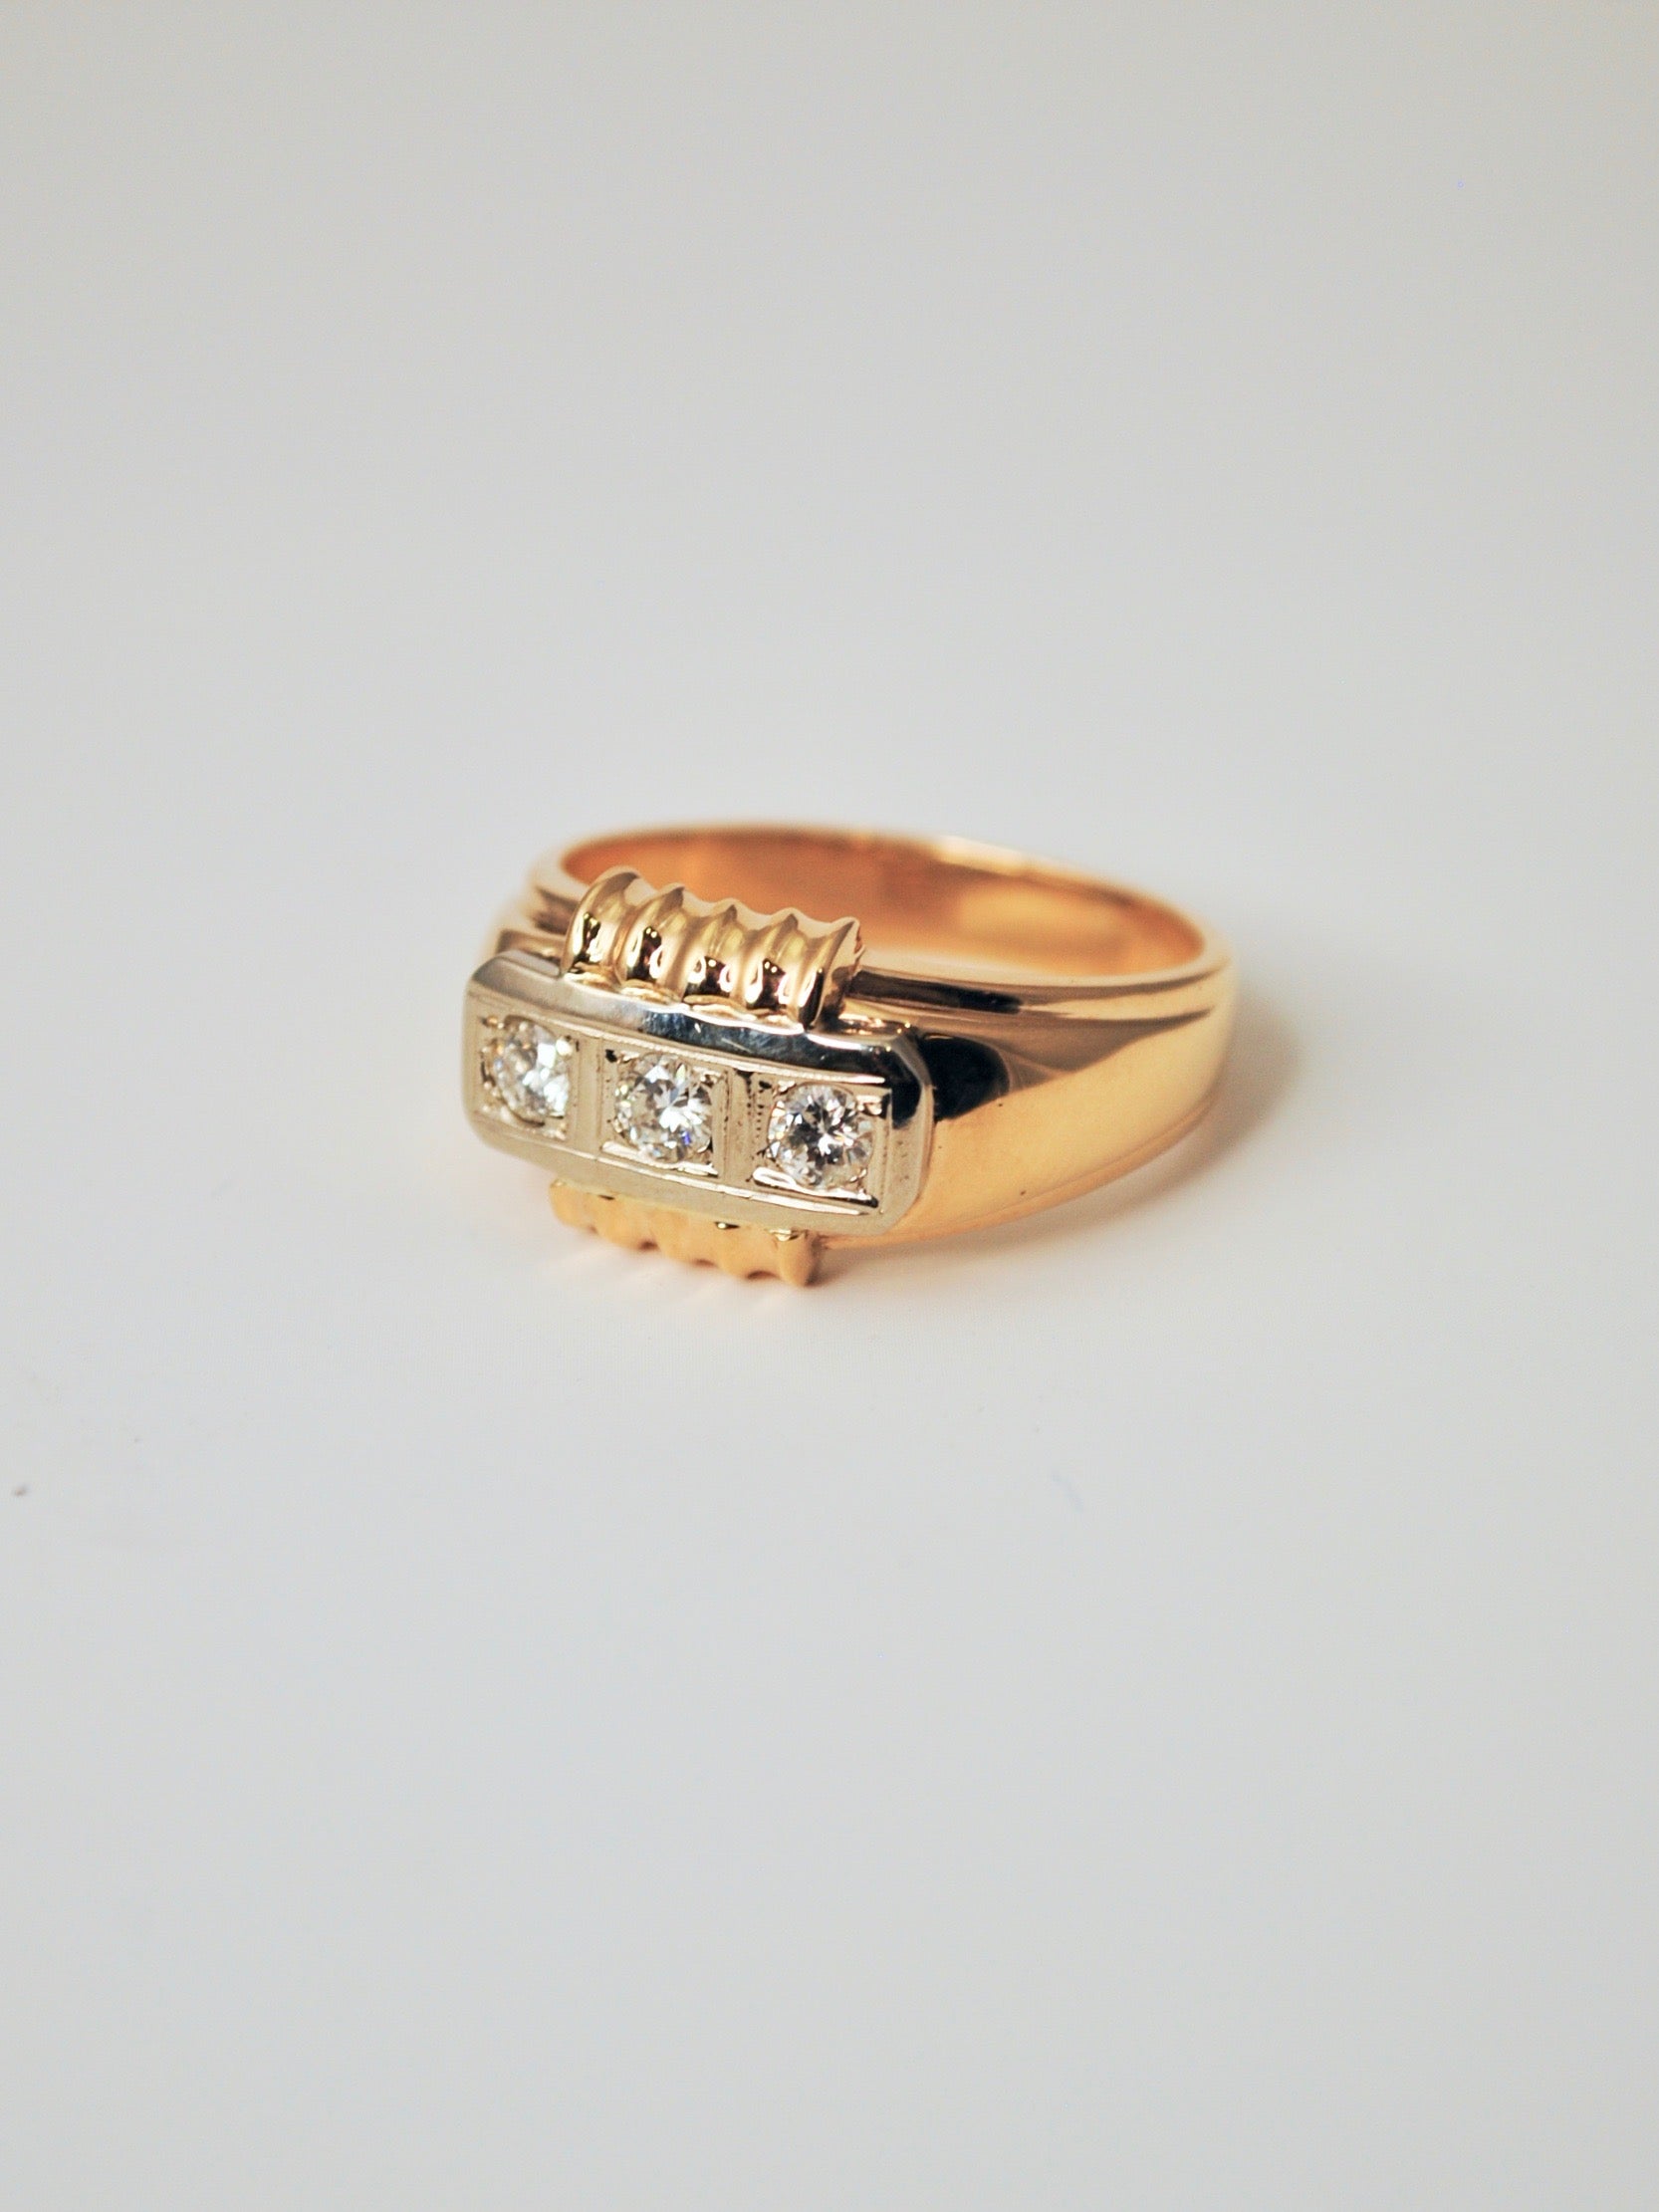 Vintage Men's Ring